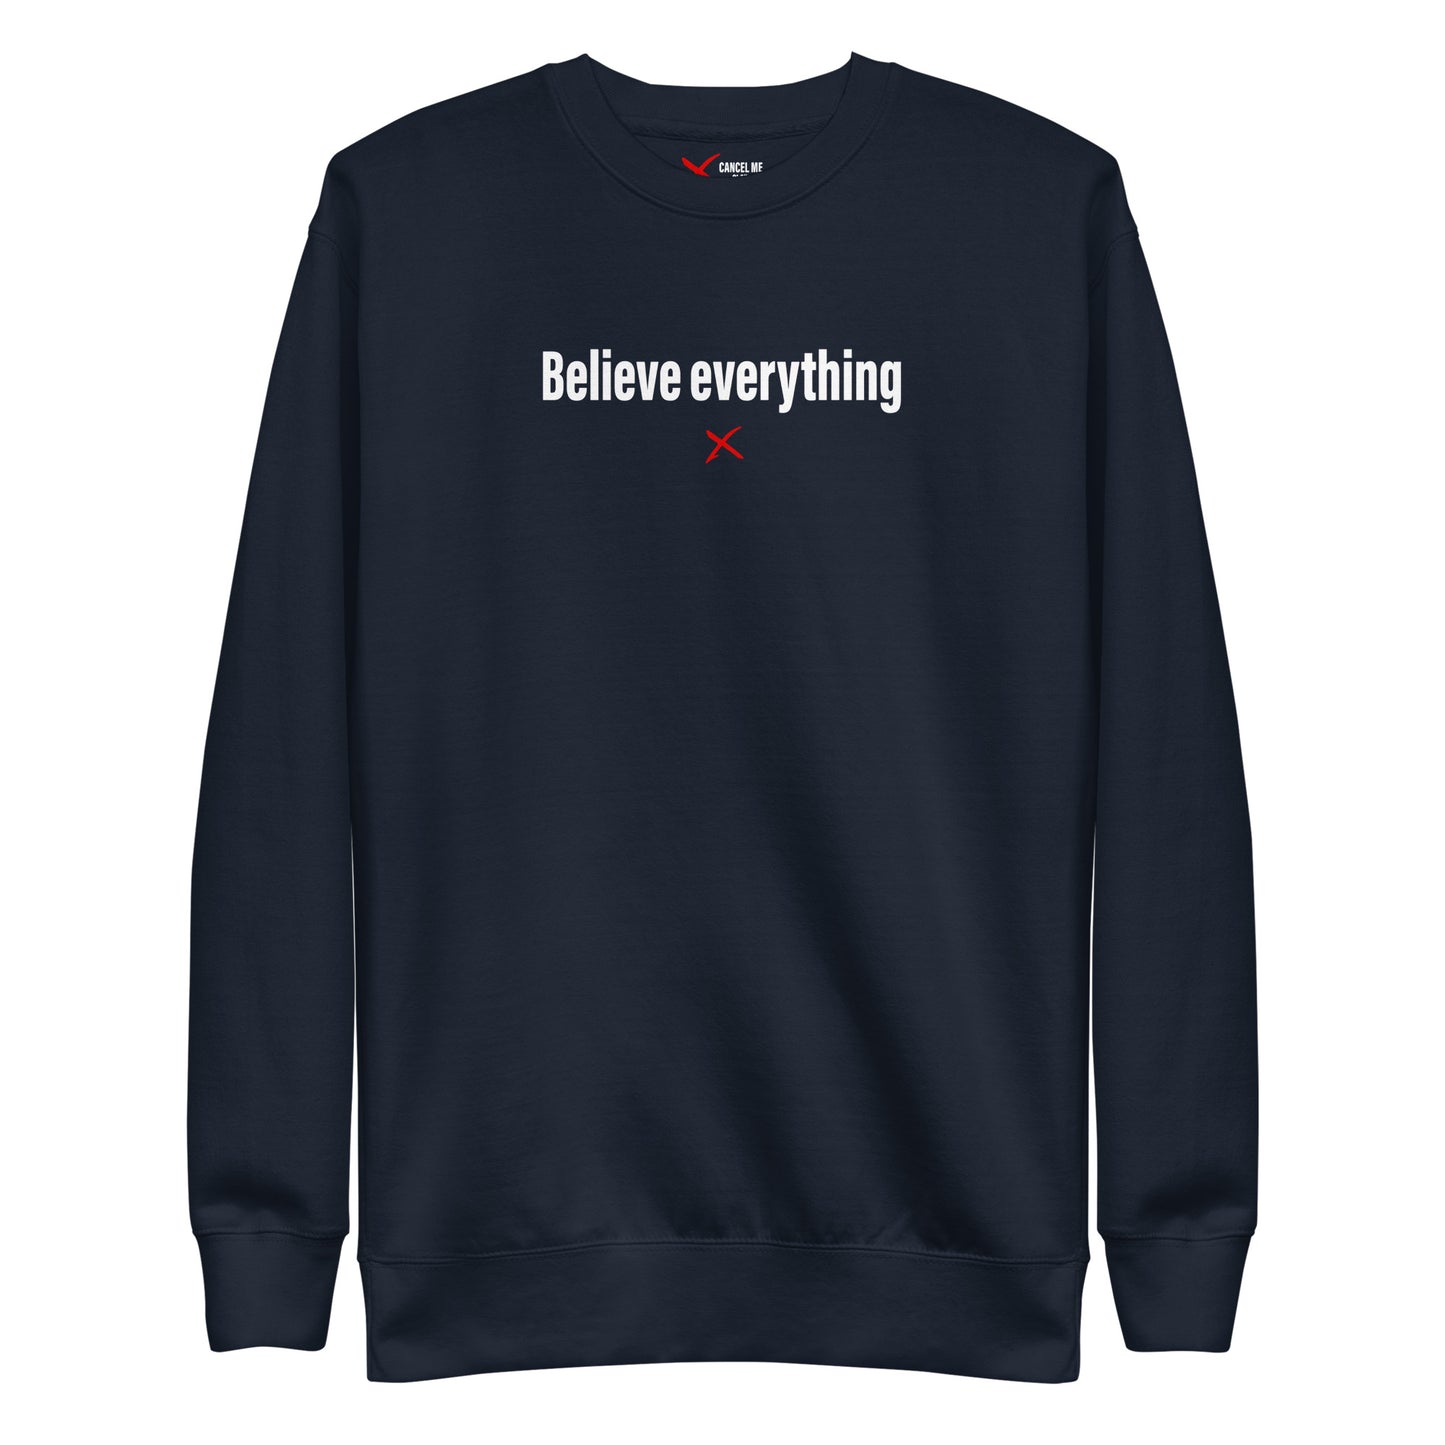 Believe everything - Sweatshirt